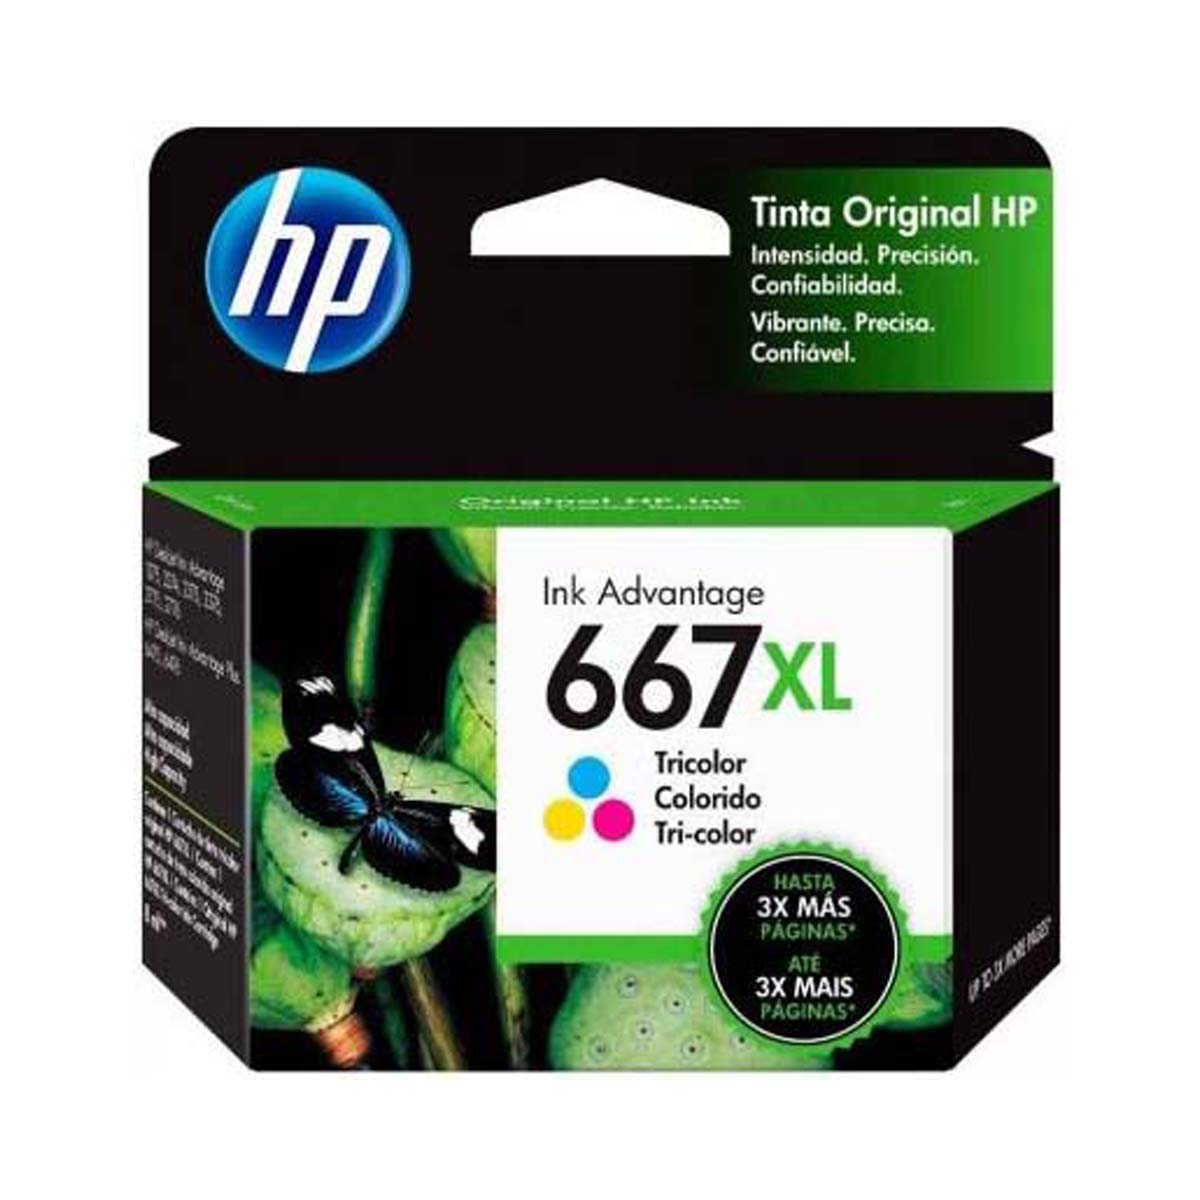 HP - 667XL Ink Cartridge, Tri-color